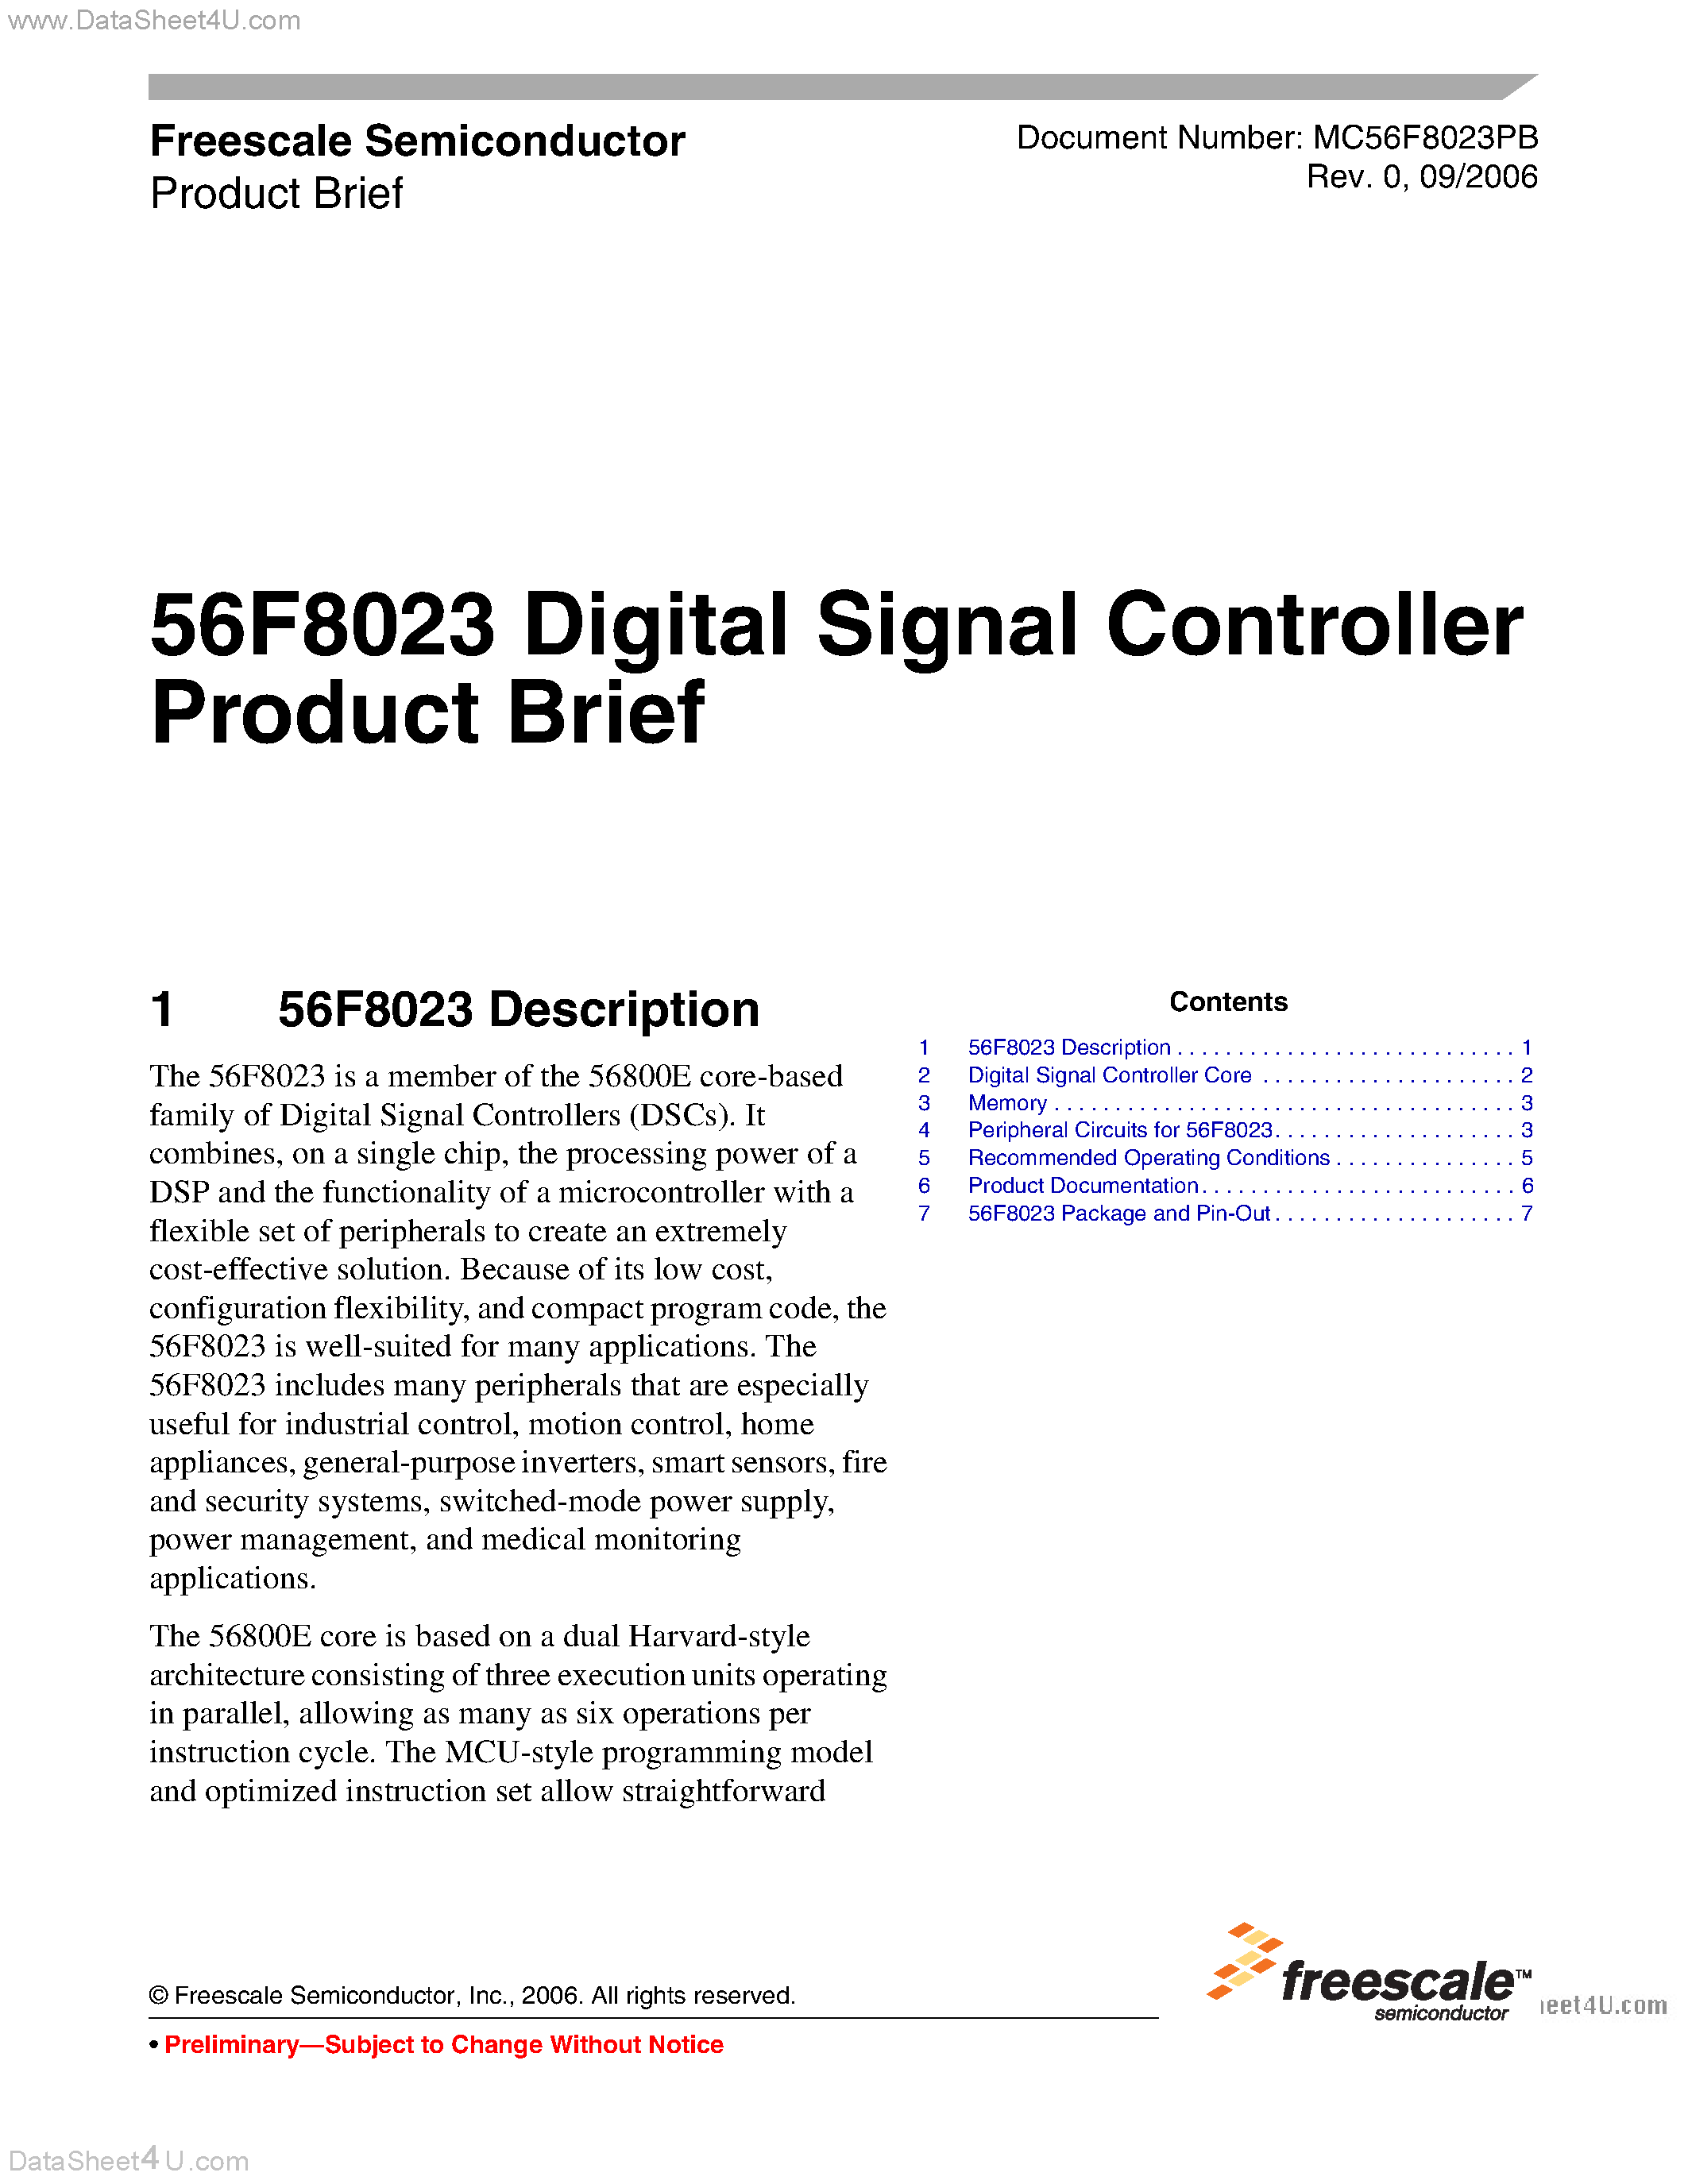 Даташит MC56F8023 - Digital Signal Controller страница 1